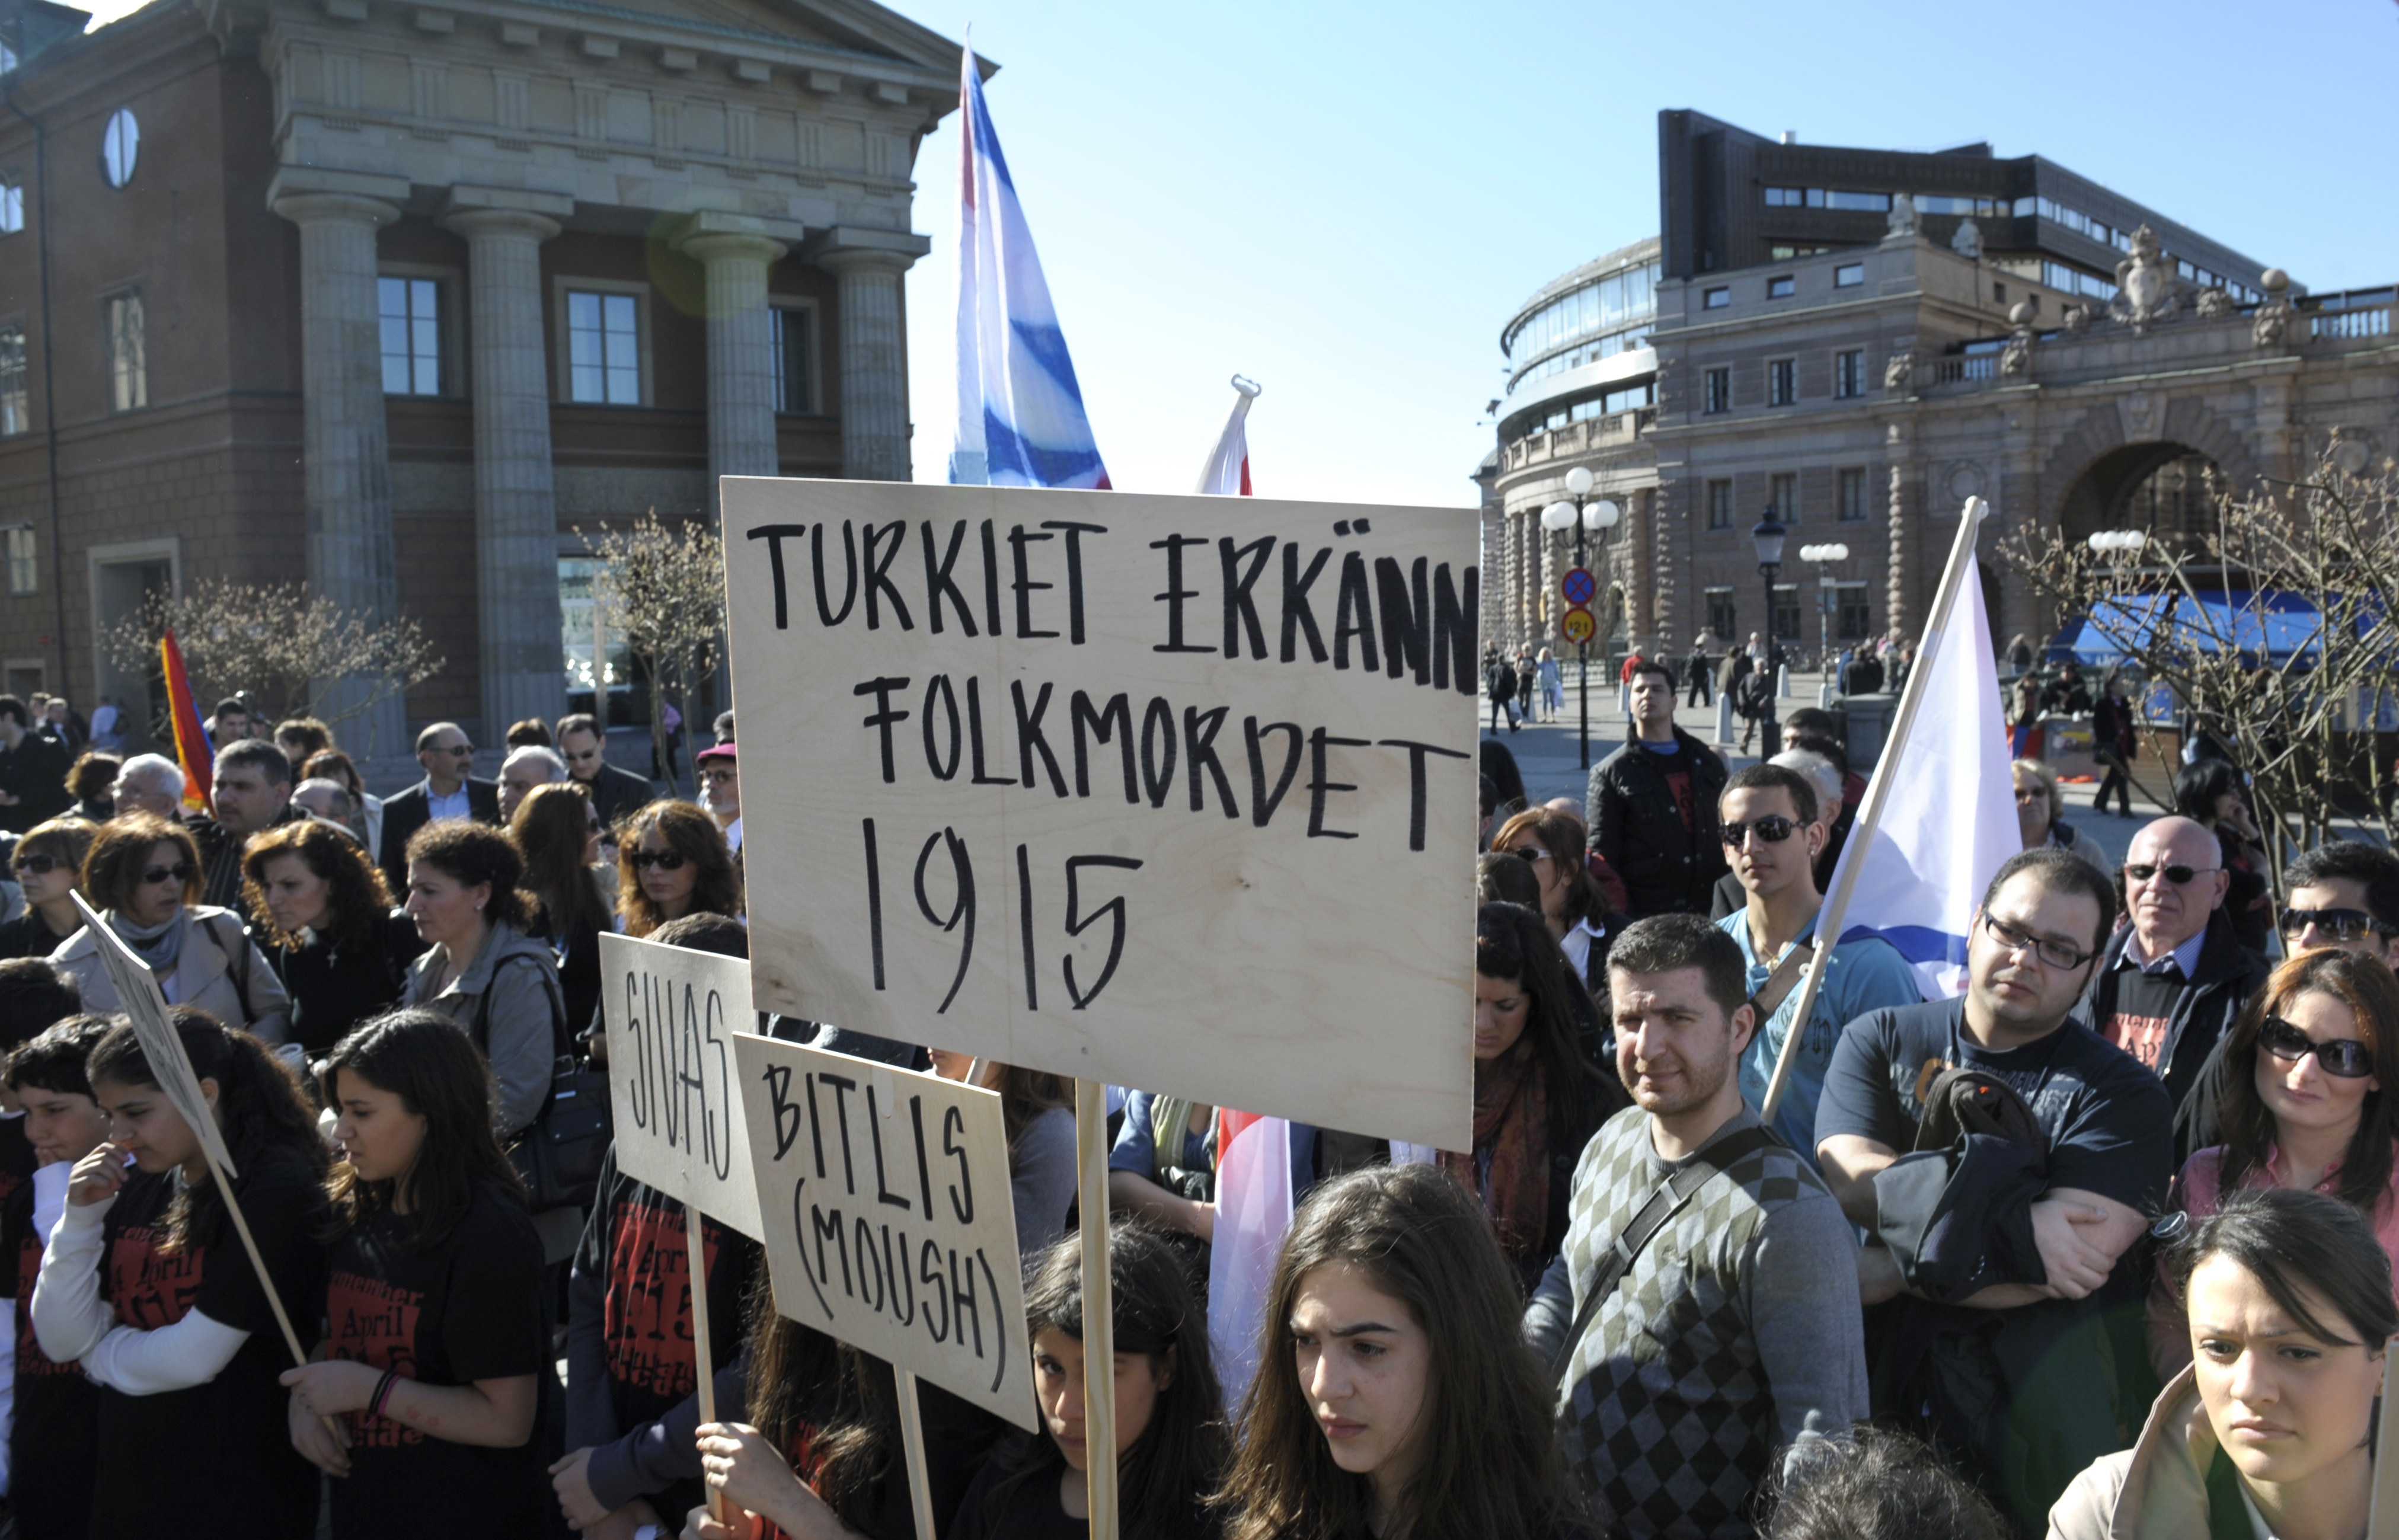 turkiet, Sverige, Folkmord, Armenier